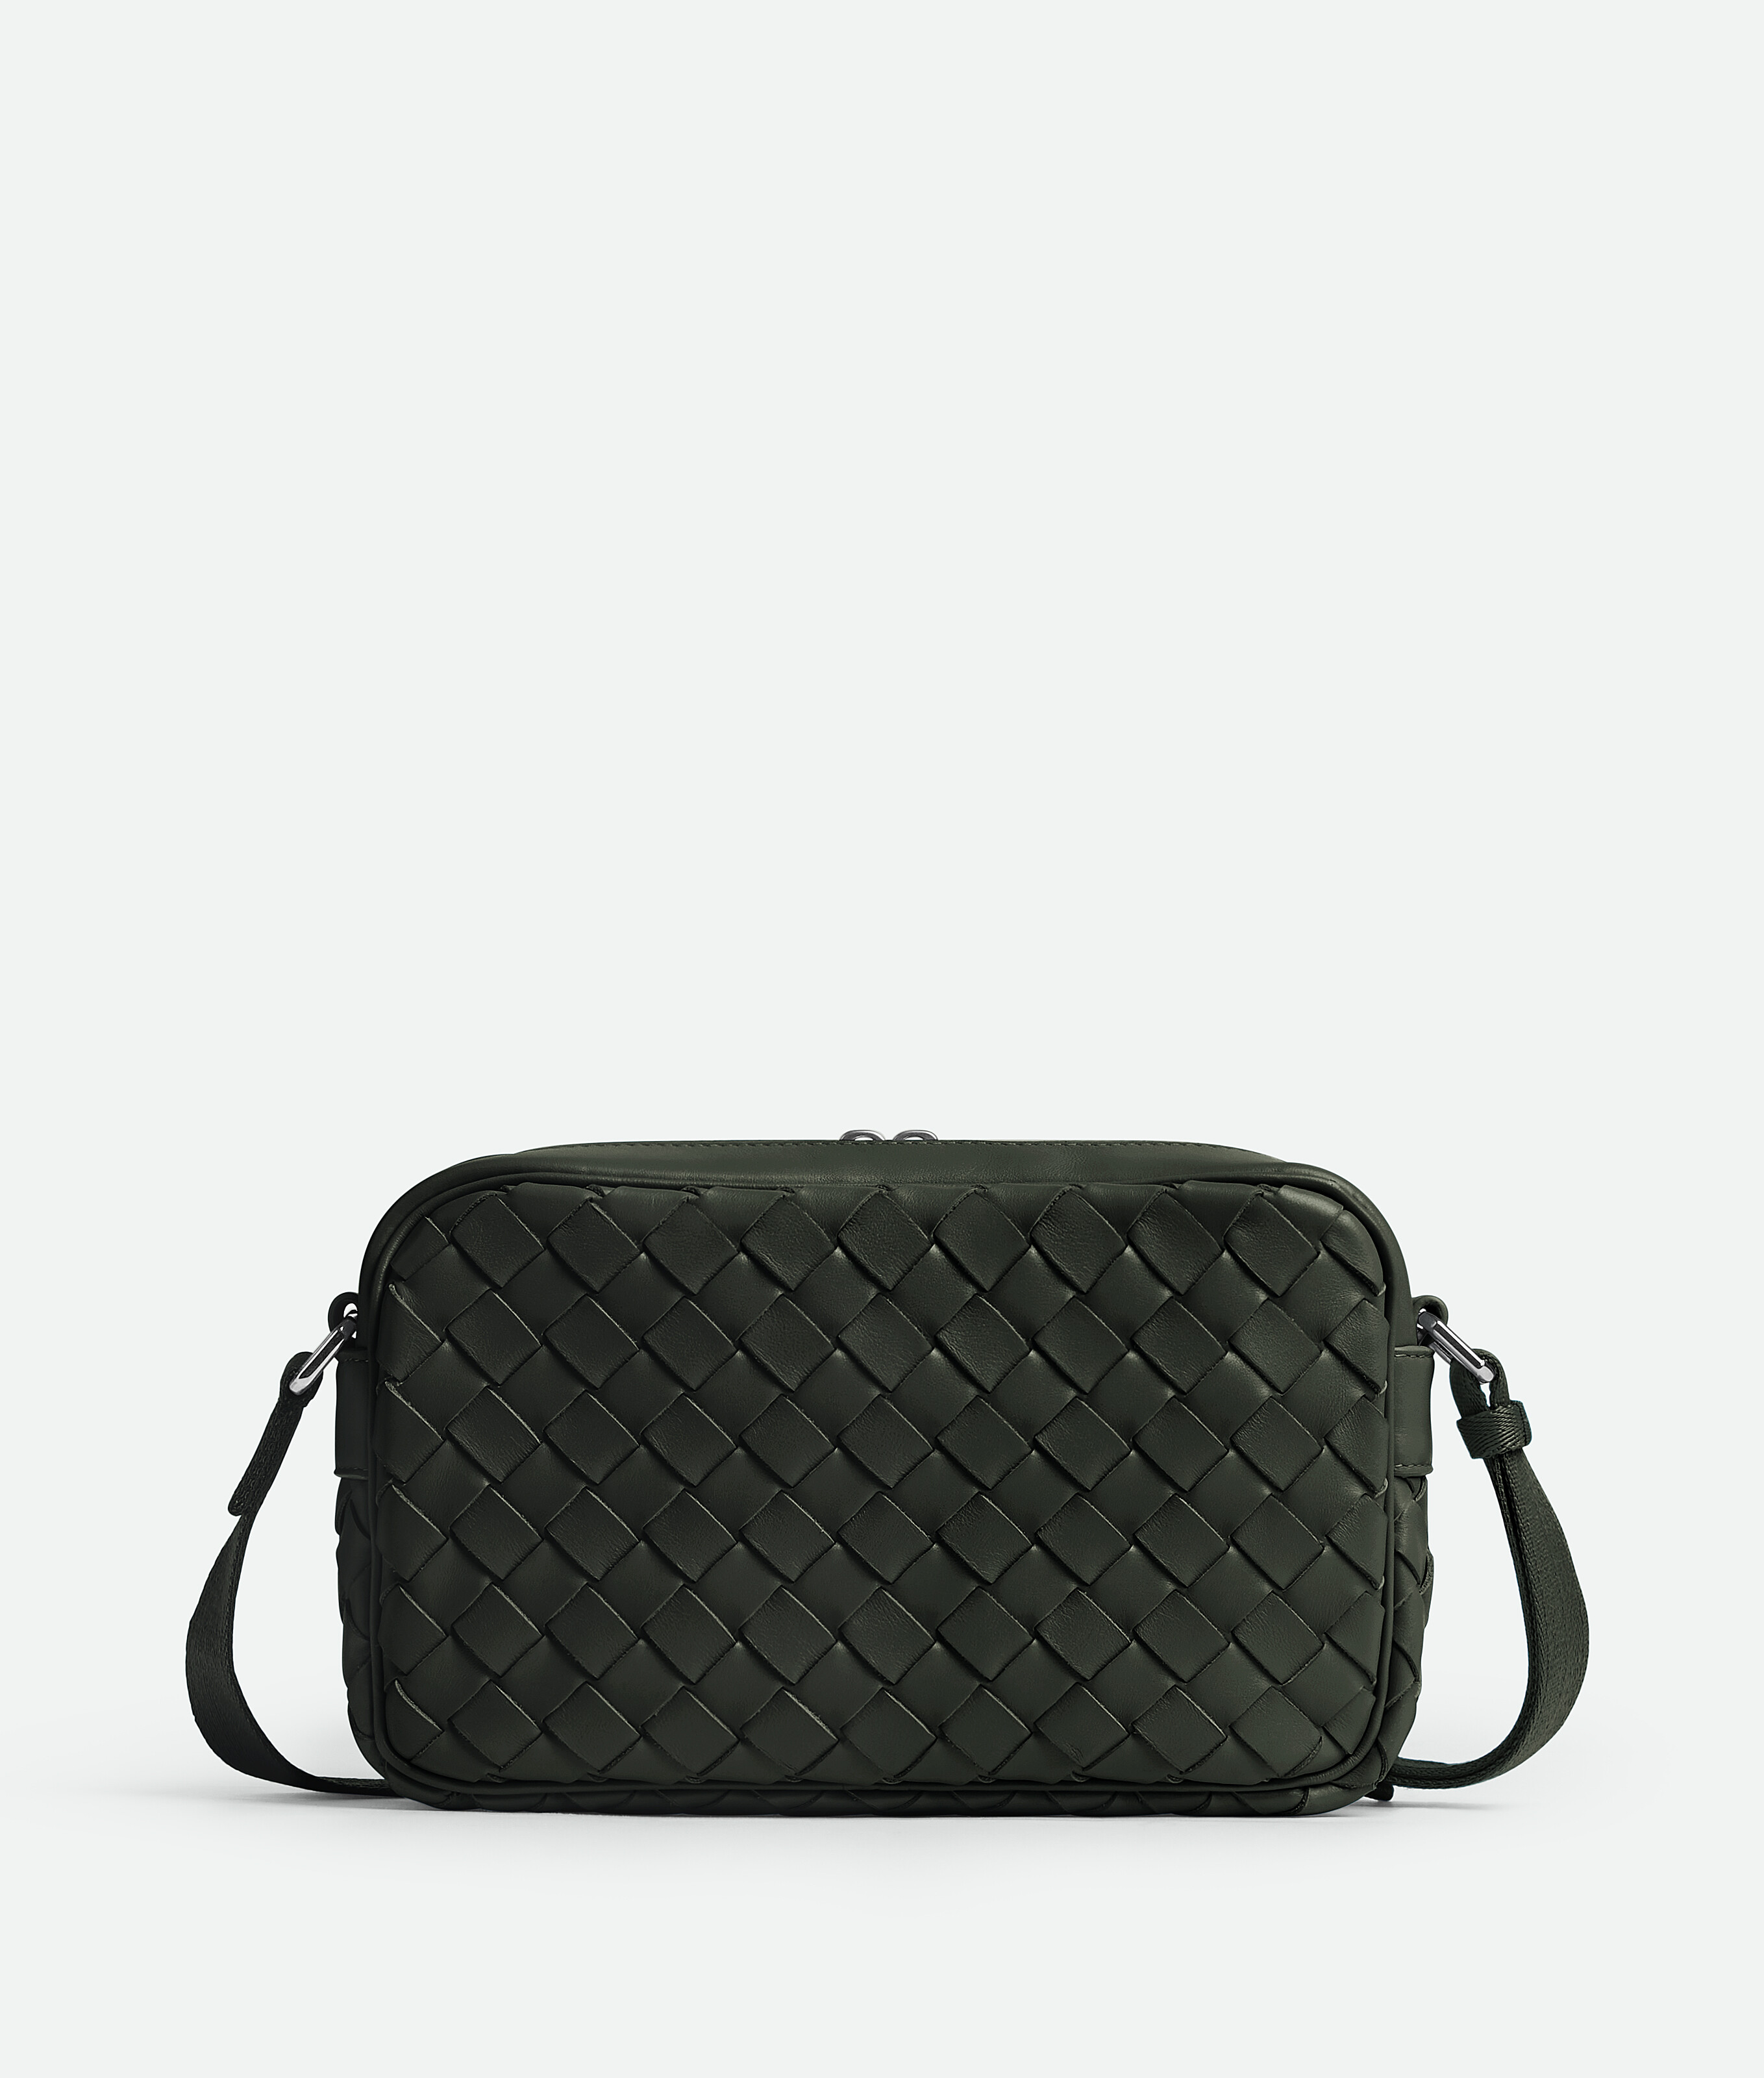 Bottega Veneta® Small Intrecciato Camera Bag in Dark Green. Shop